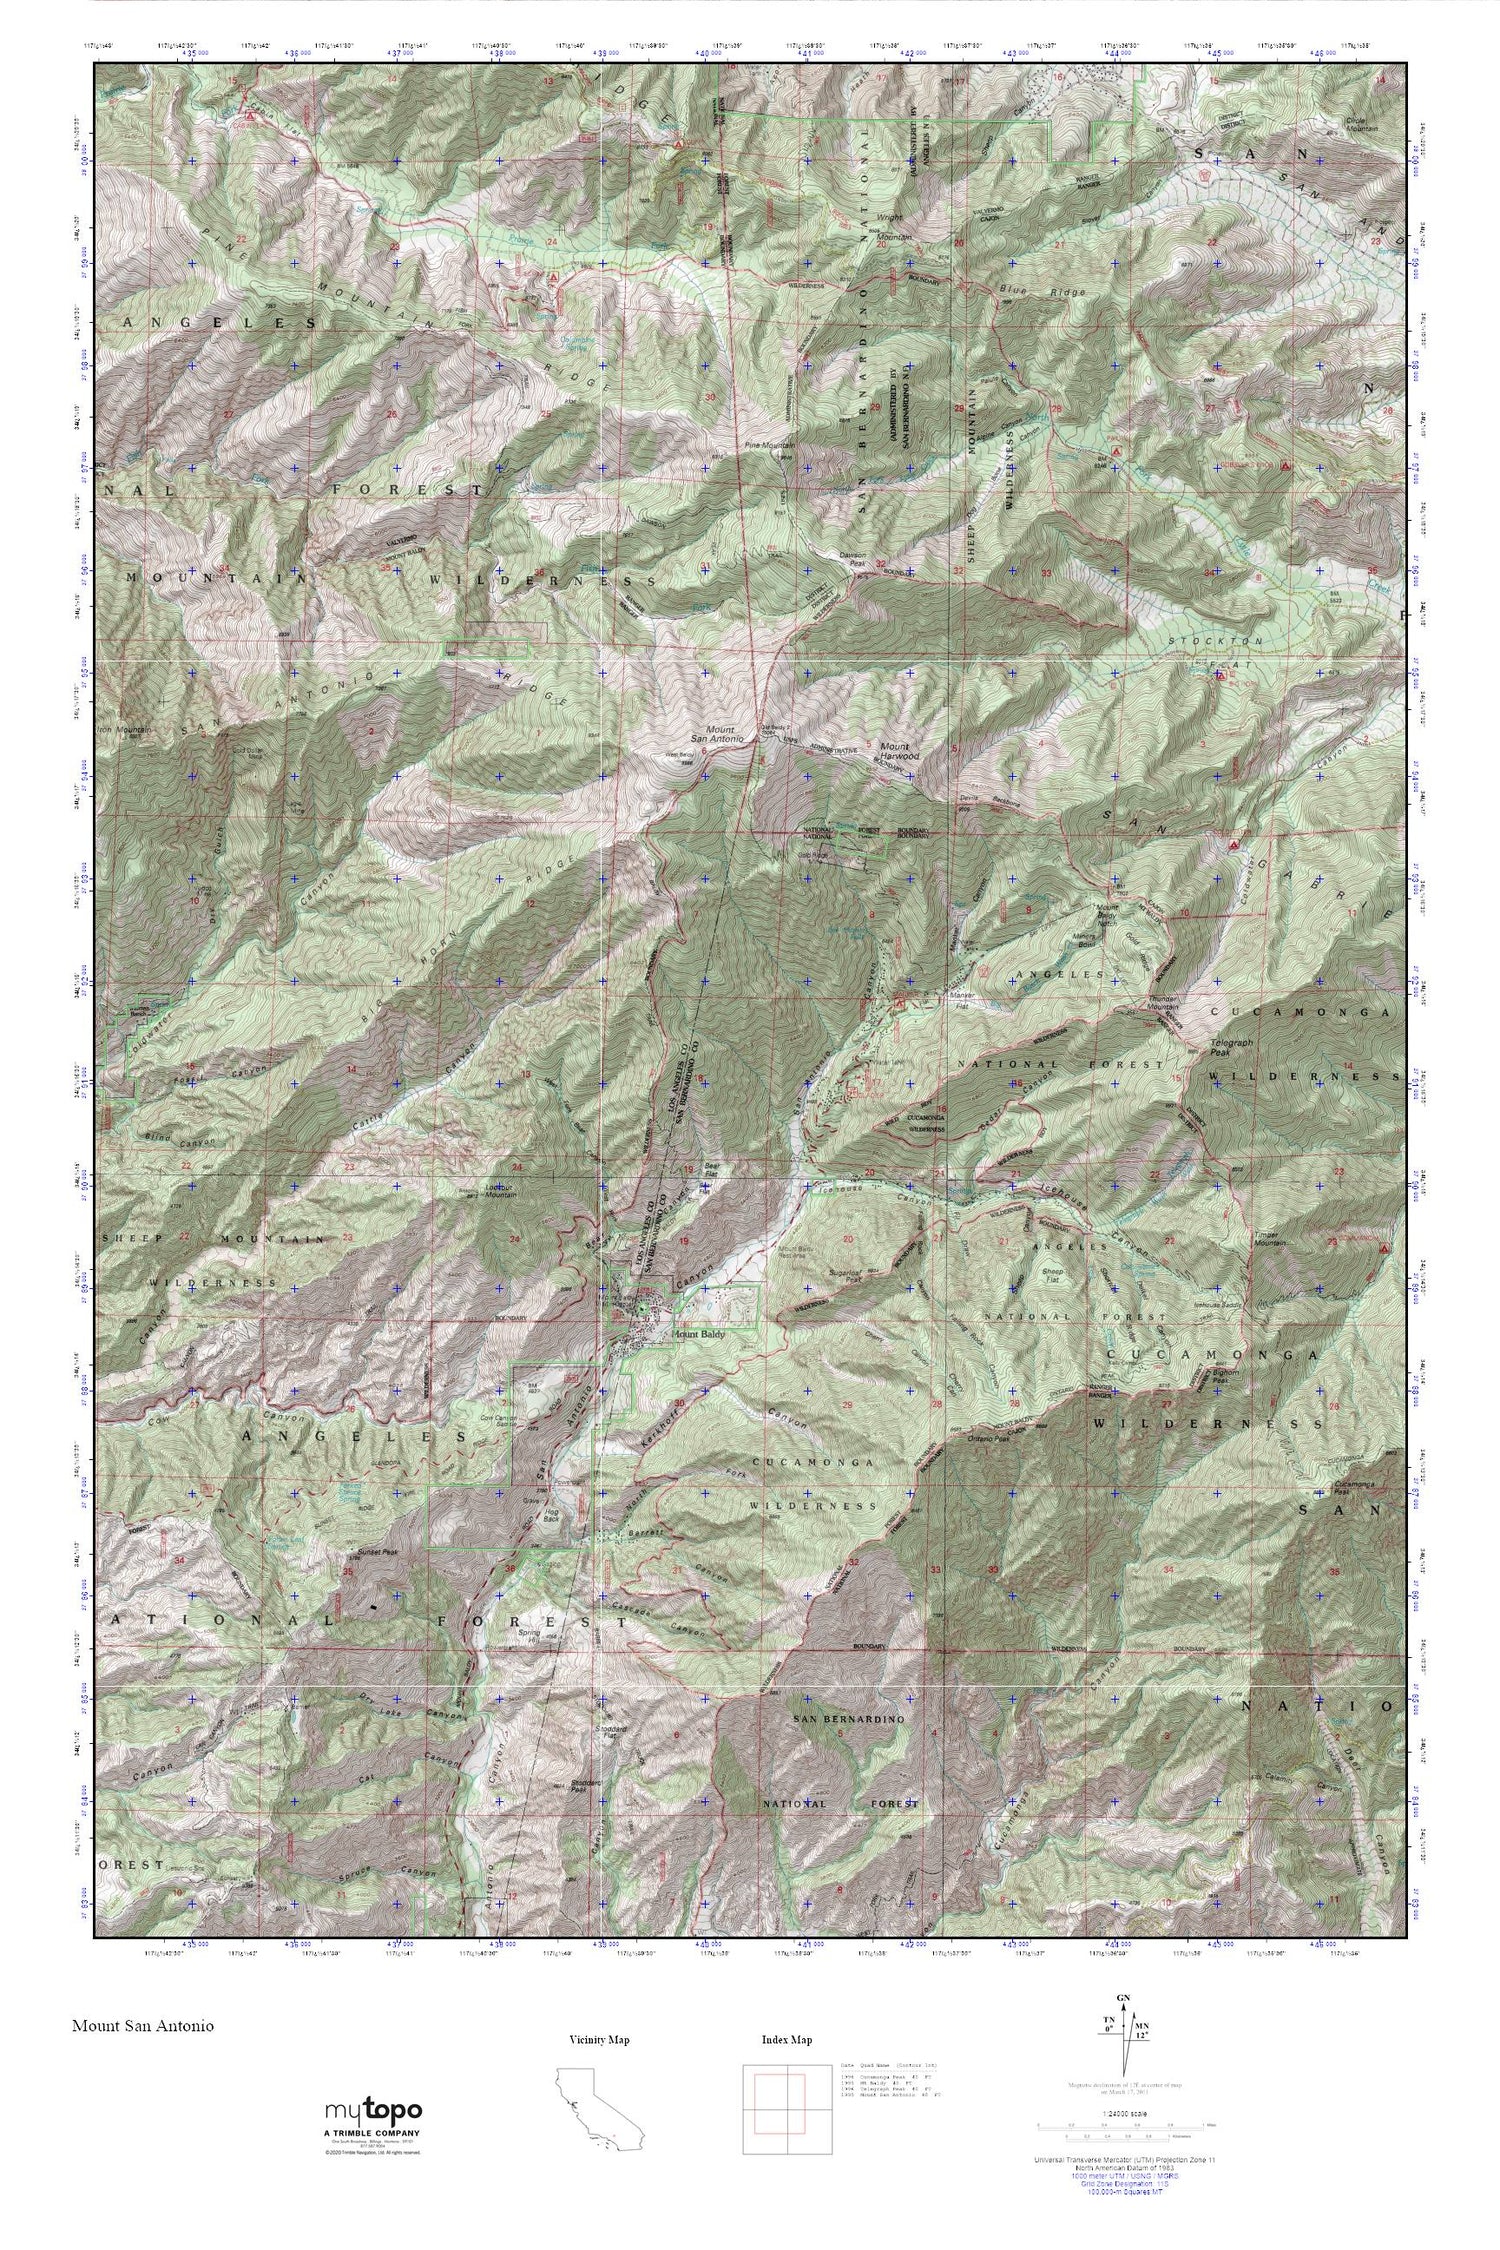 Mount Baldy MyTopo Explorer Series Map Image